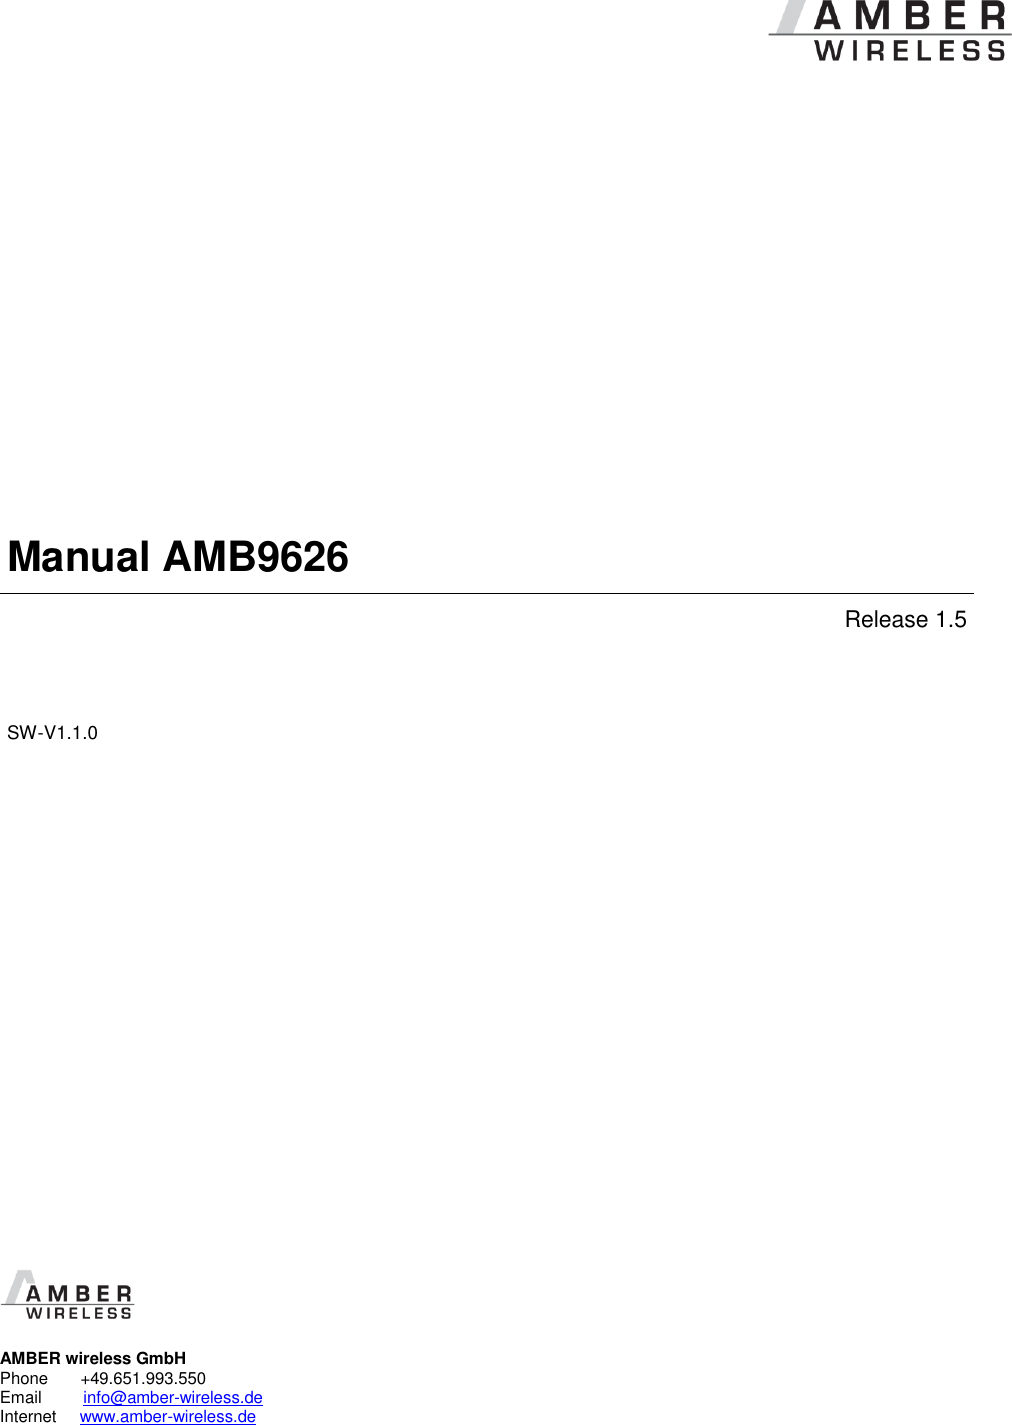            Manual AMB9626 Release 1.5 SW-V1.1.0                   AMBER wireless GmbH Phone       +49.651.993.550  Email         info@amber-wireless.de Internet     www.amber-wireless.de   